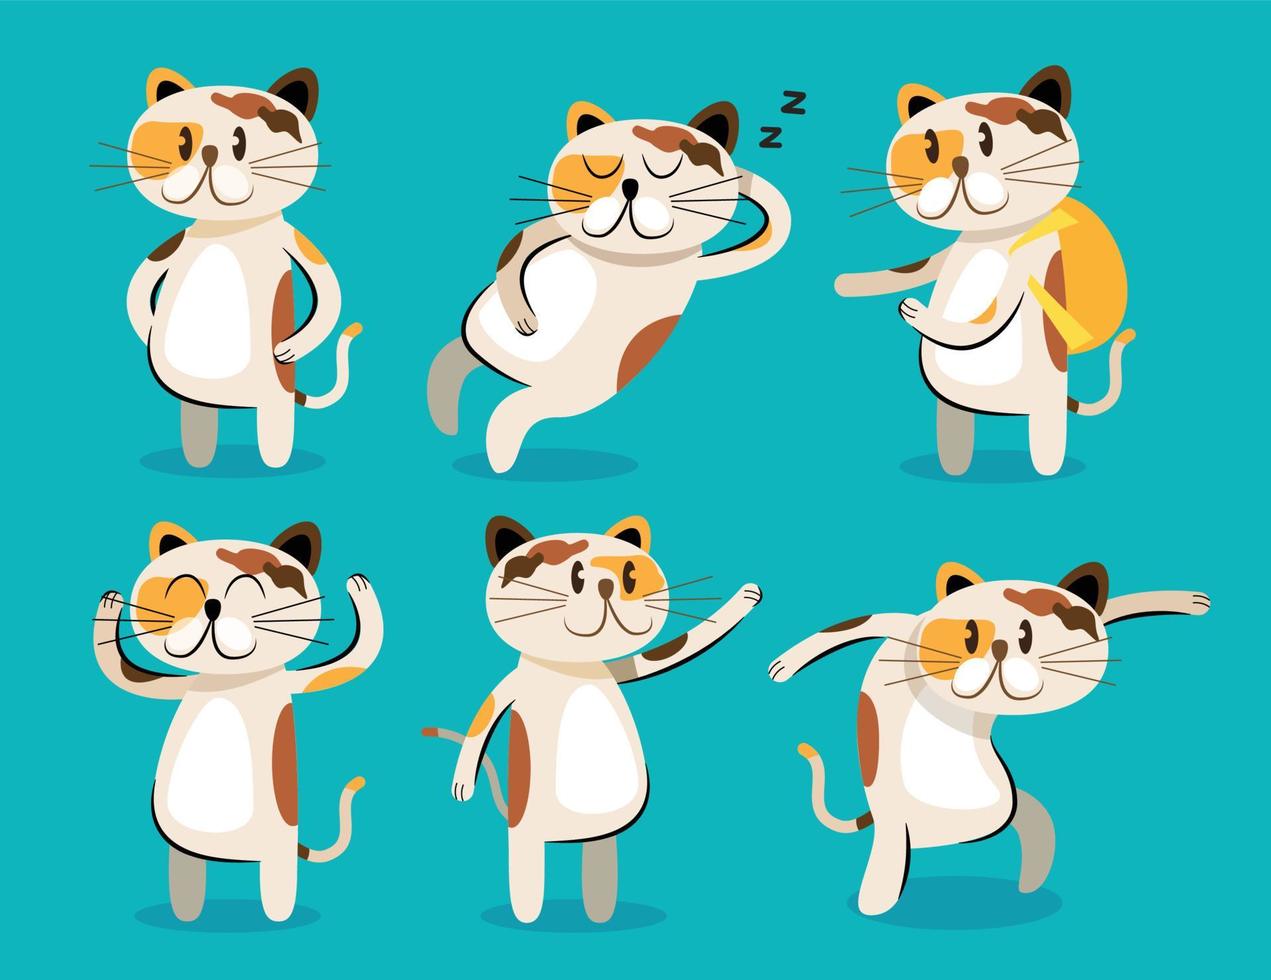 cute cat cartoon collection vector illustration